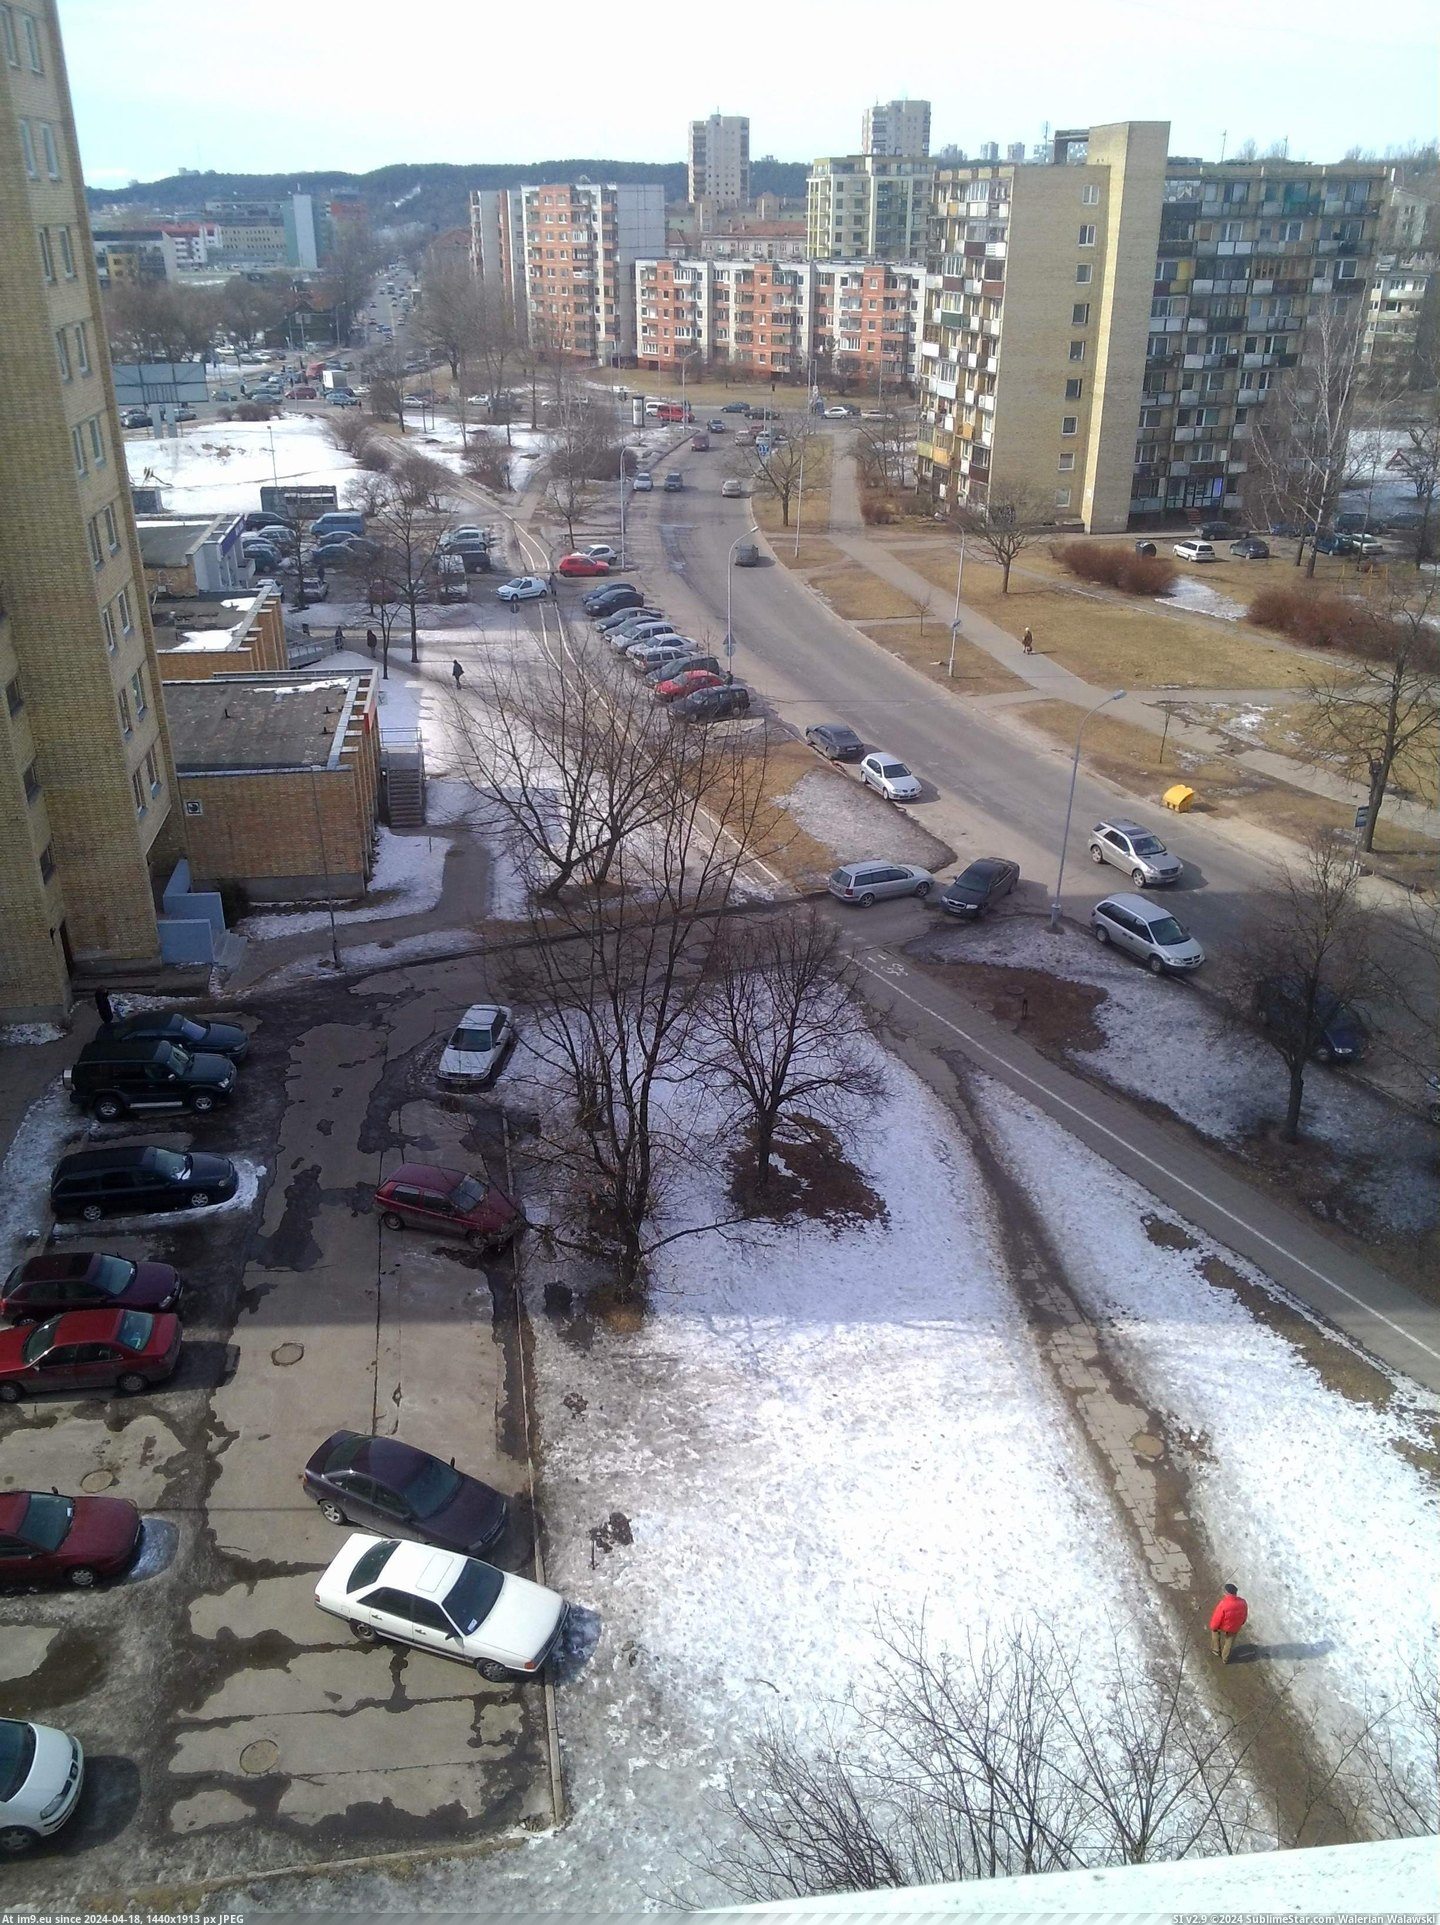  #Vilnius  20130325-1300vilnius Pic. (Bild von album kovas))